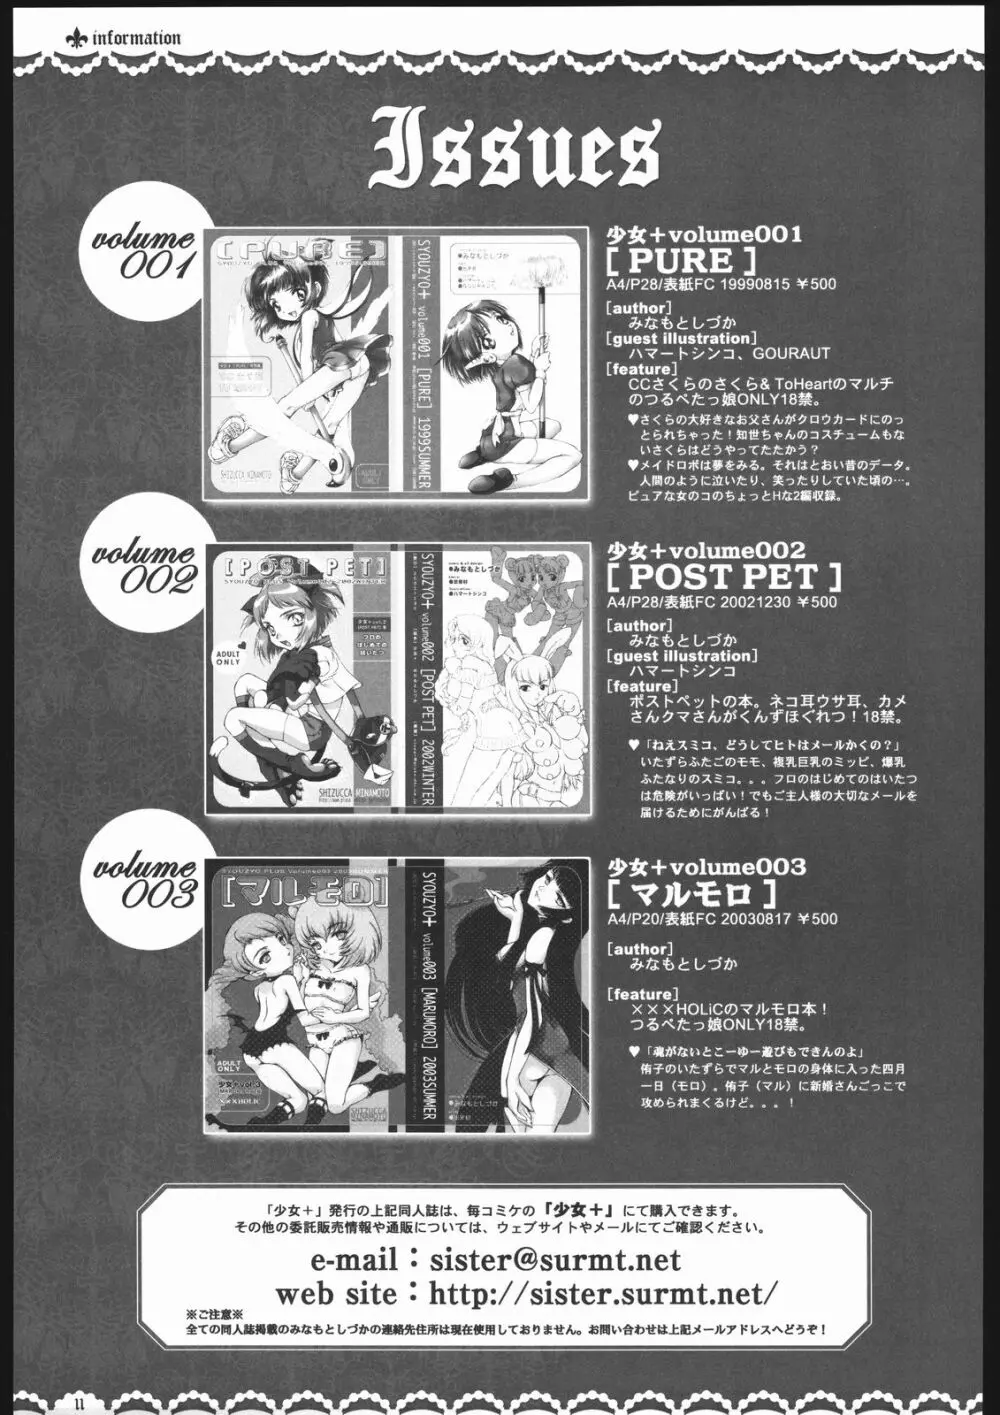 SYOUZYO PLUS Volume004 2005 SUMMER 10ページ